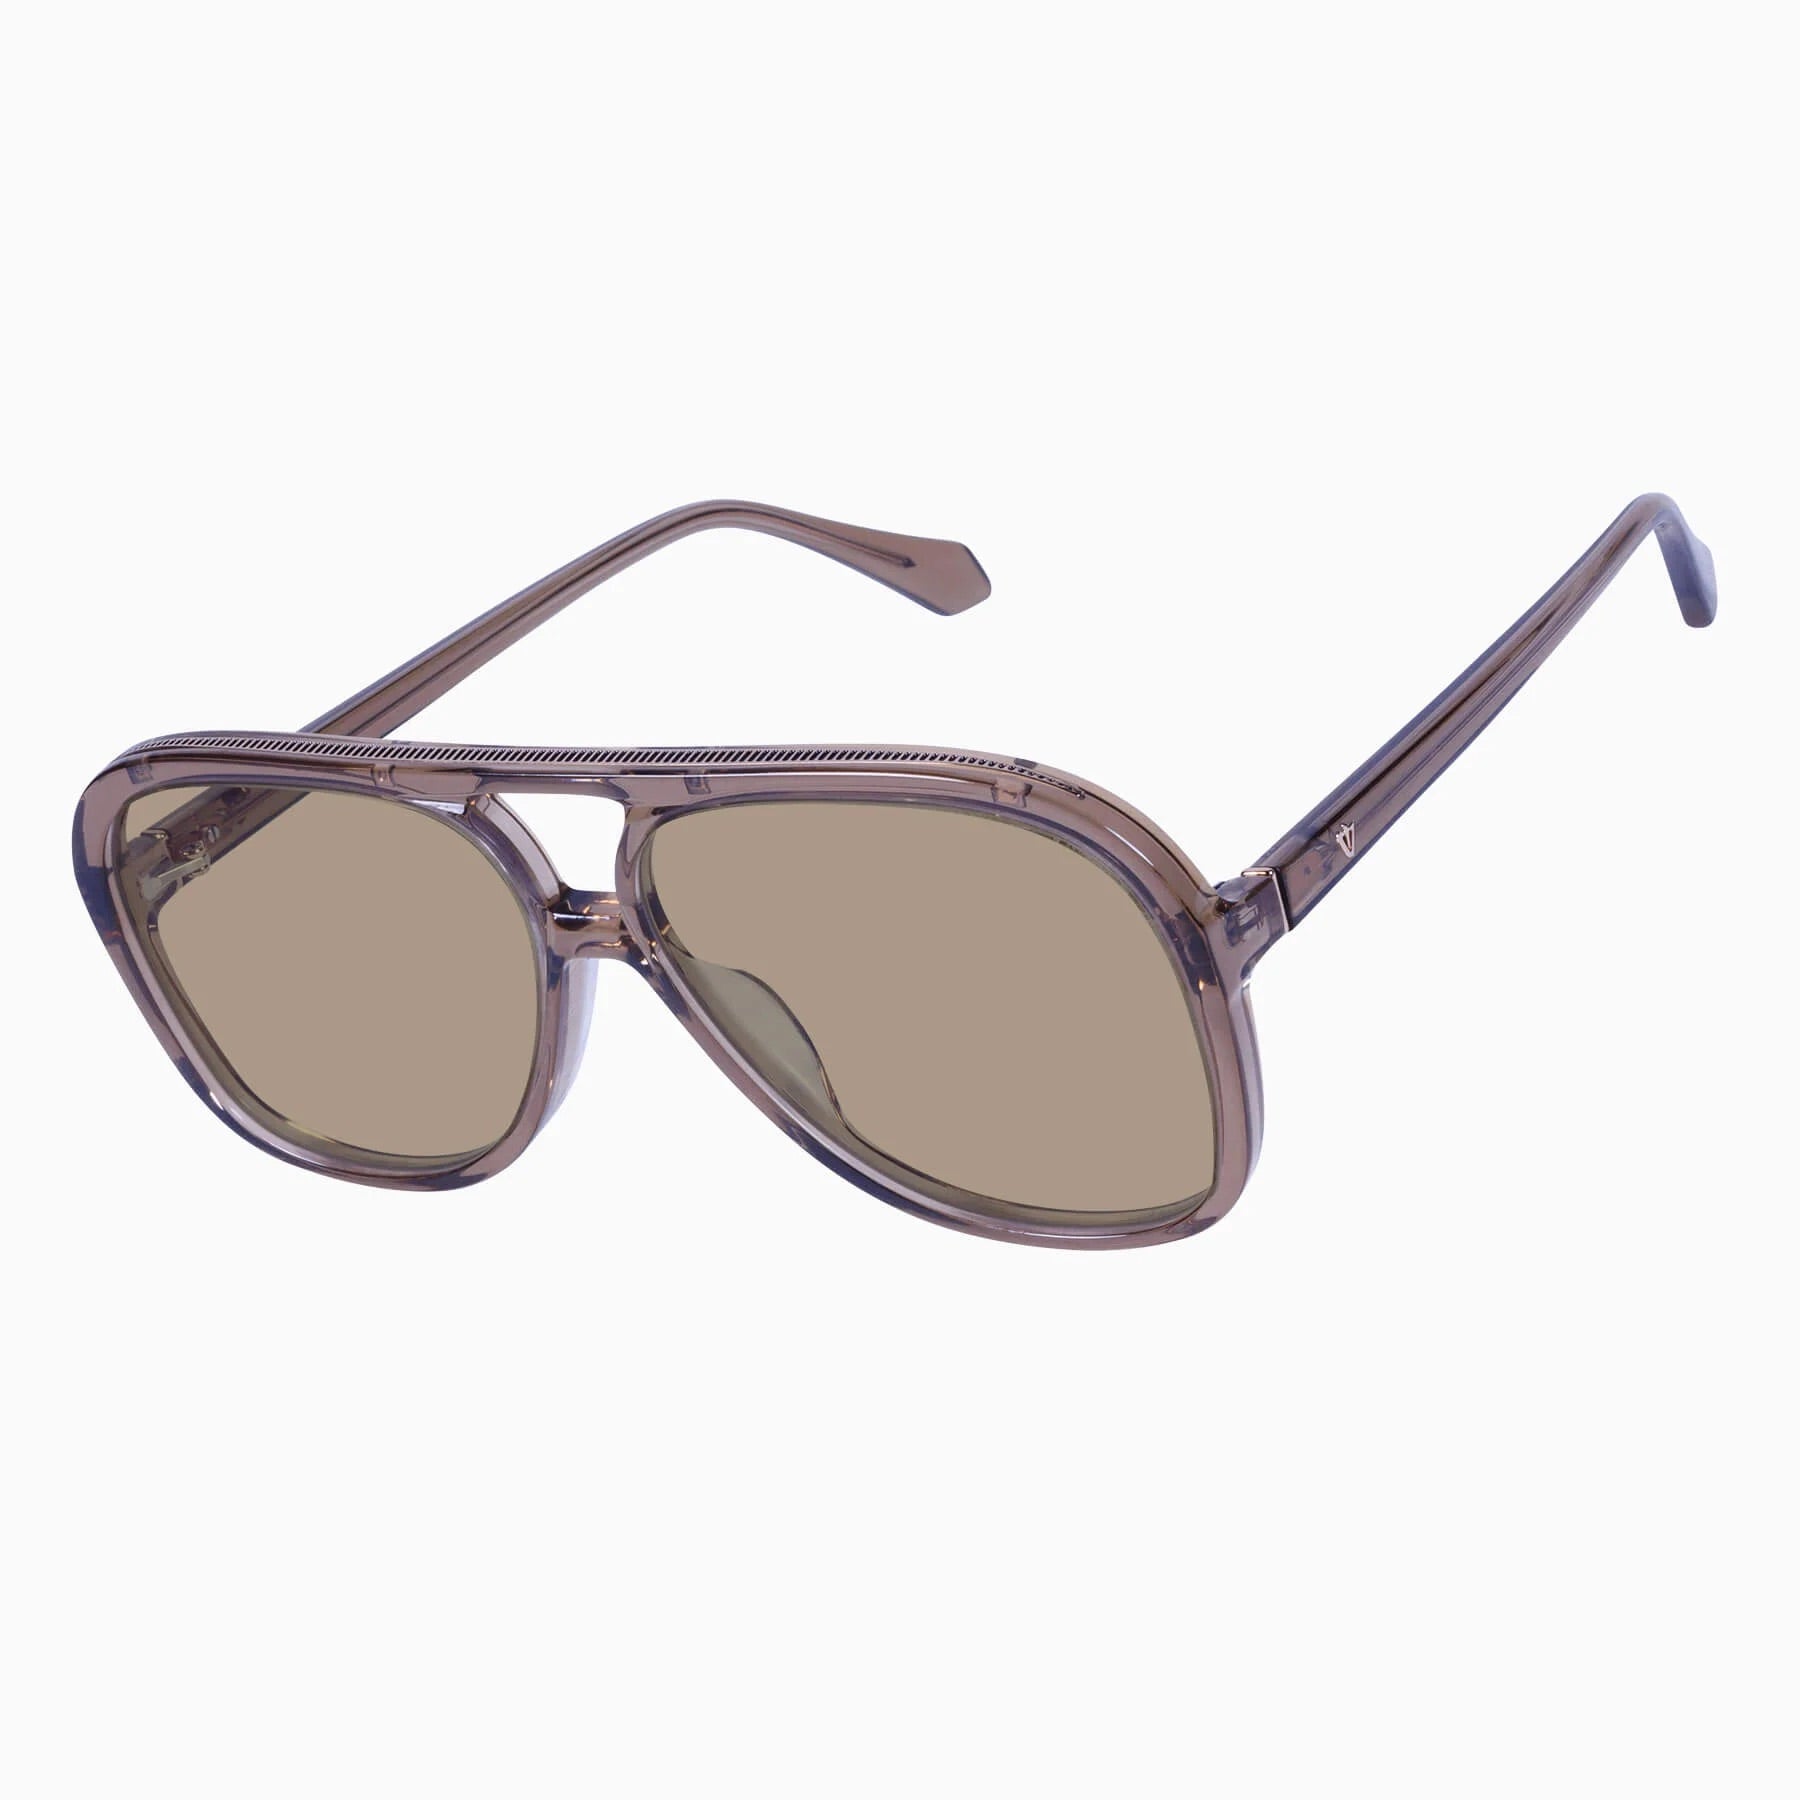 Bang | Sunglasses - Transparent Mocha w. Rose Gold Metal Trim / Light Brown Lens